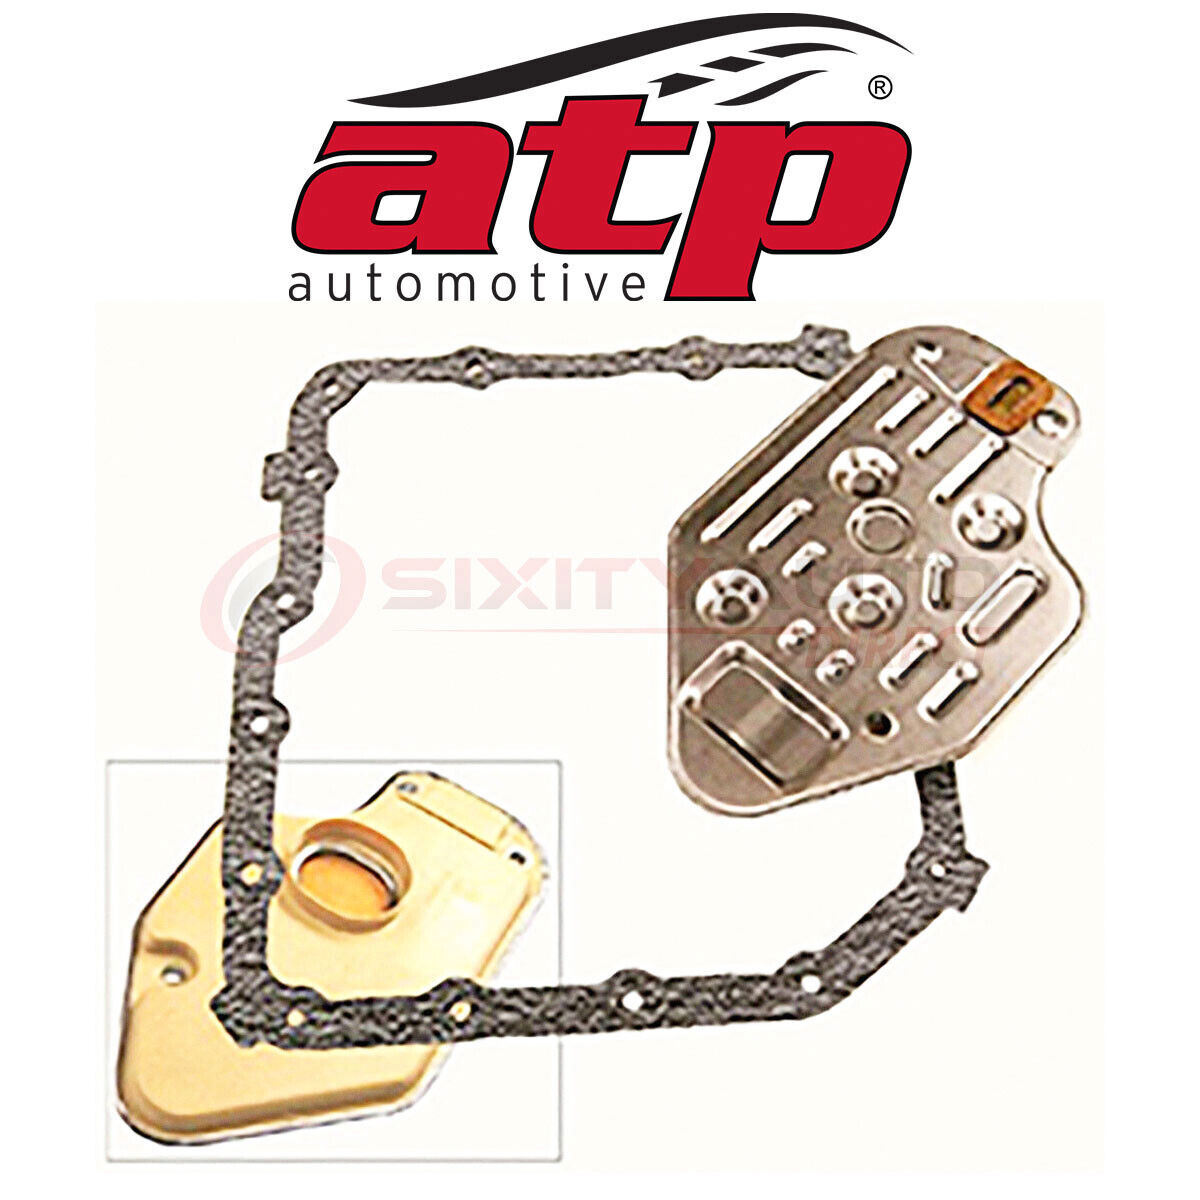 ATP Automotive B-147 Auto Transmission Filter Kit for Automatic Trans nt